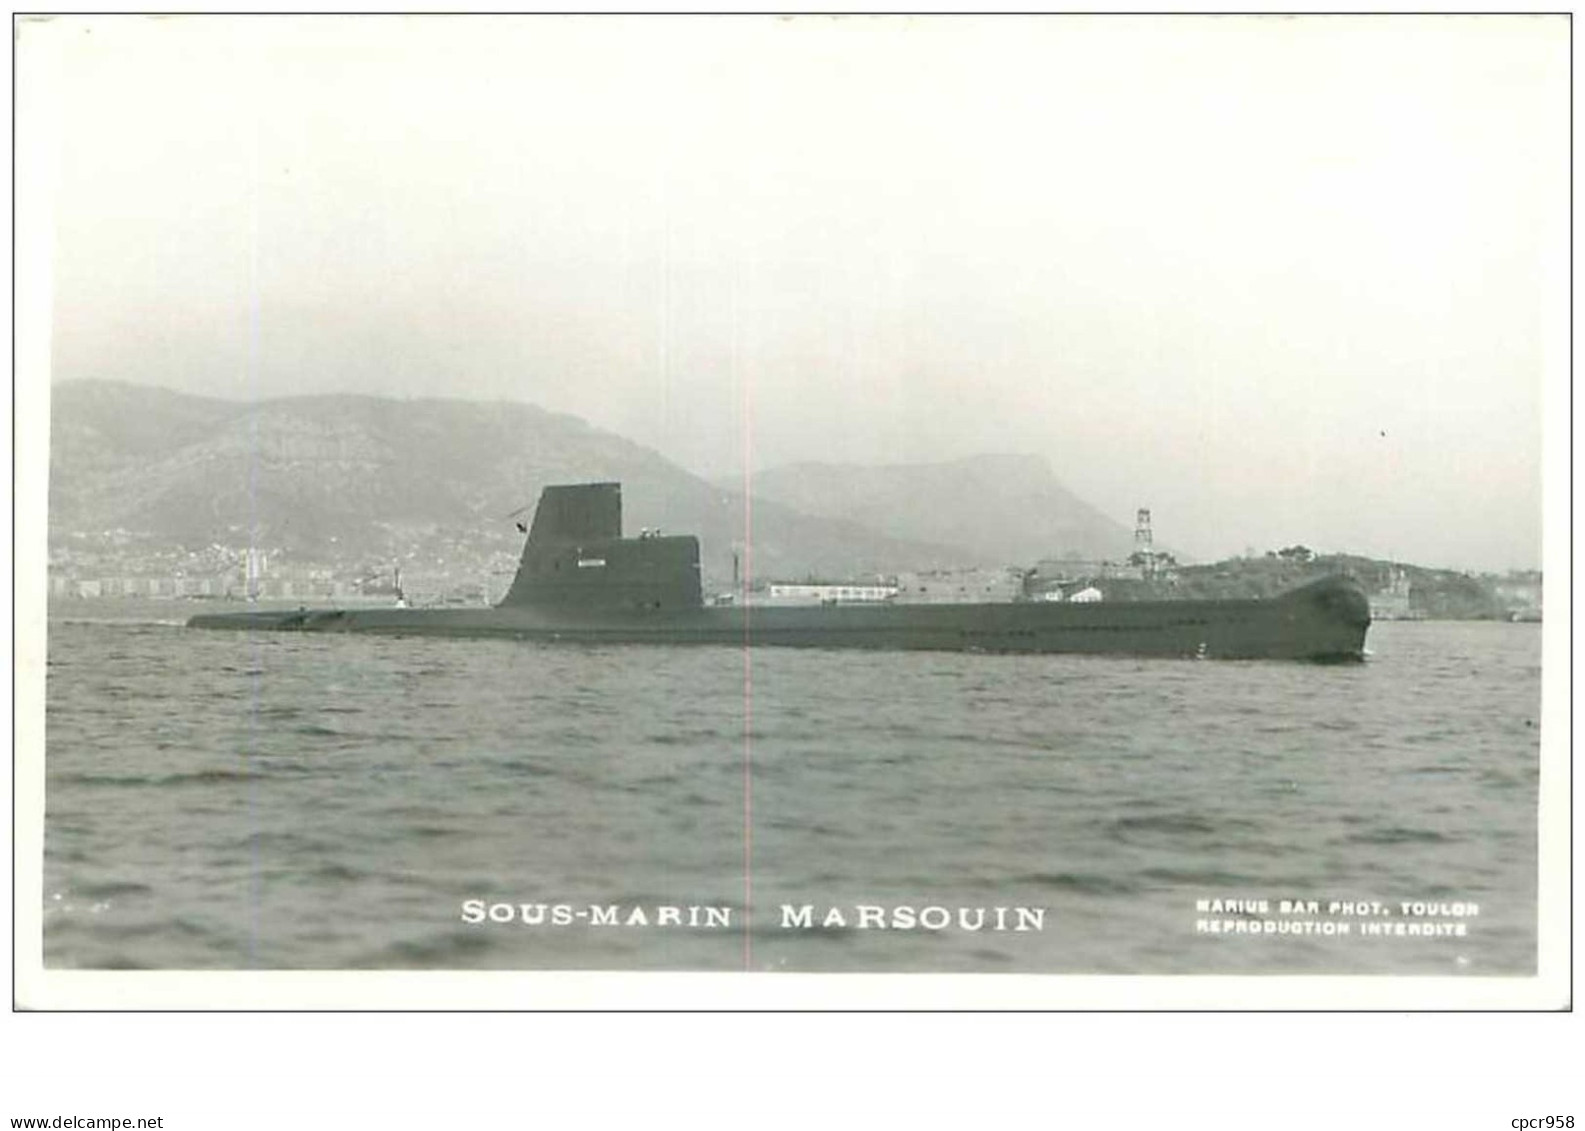 SOUS-MARINS.n°24851.PHOTO DE MARIUS BAR.MARSOUIN - Submarines